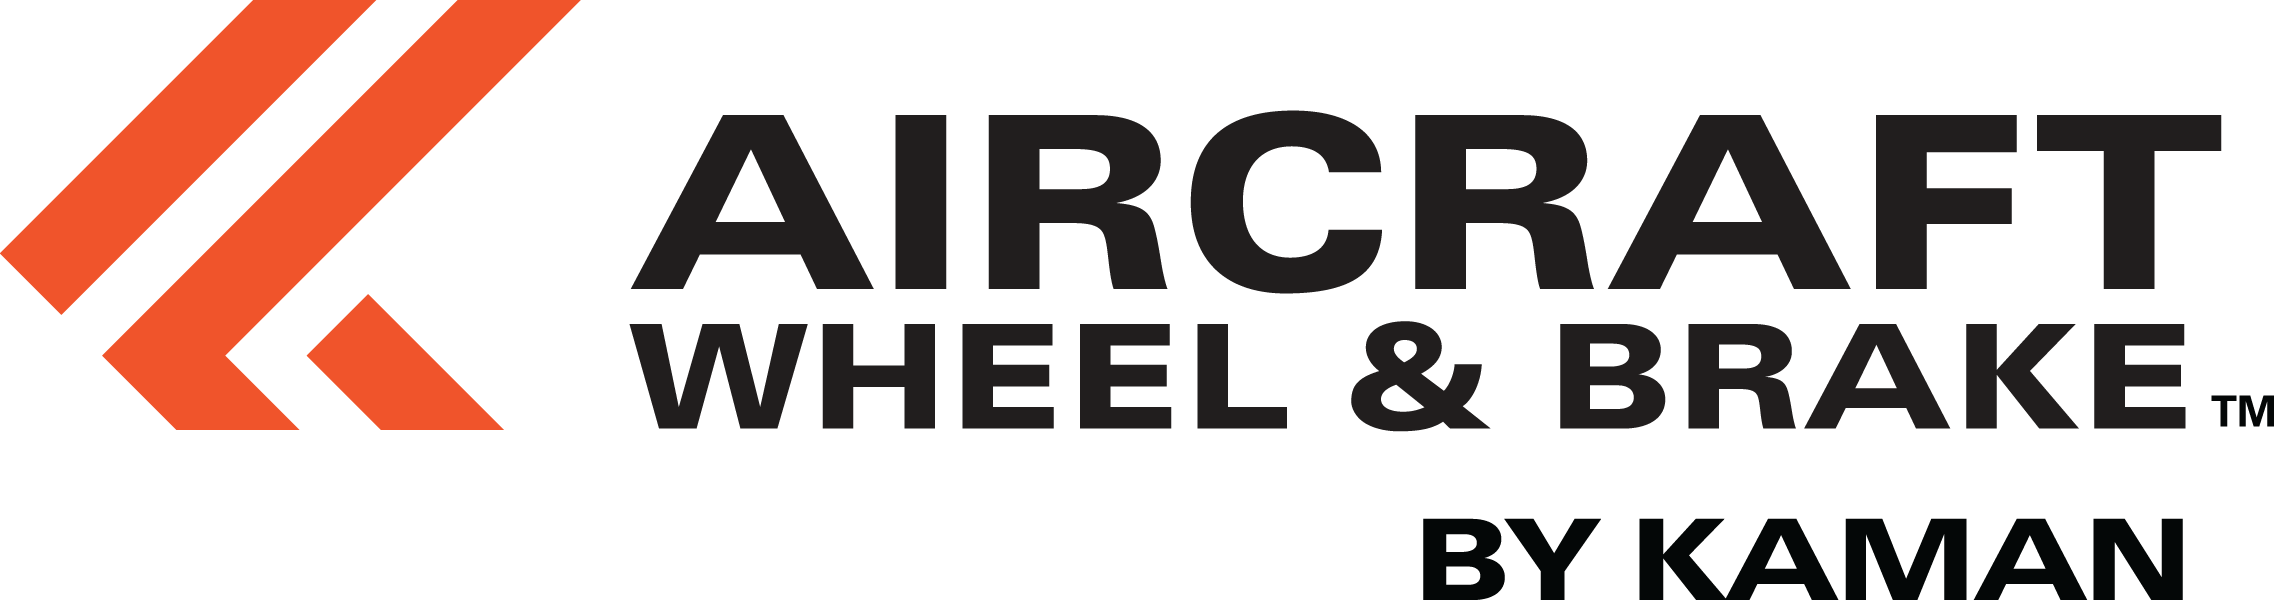 aircraft wheel & Brake